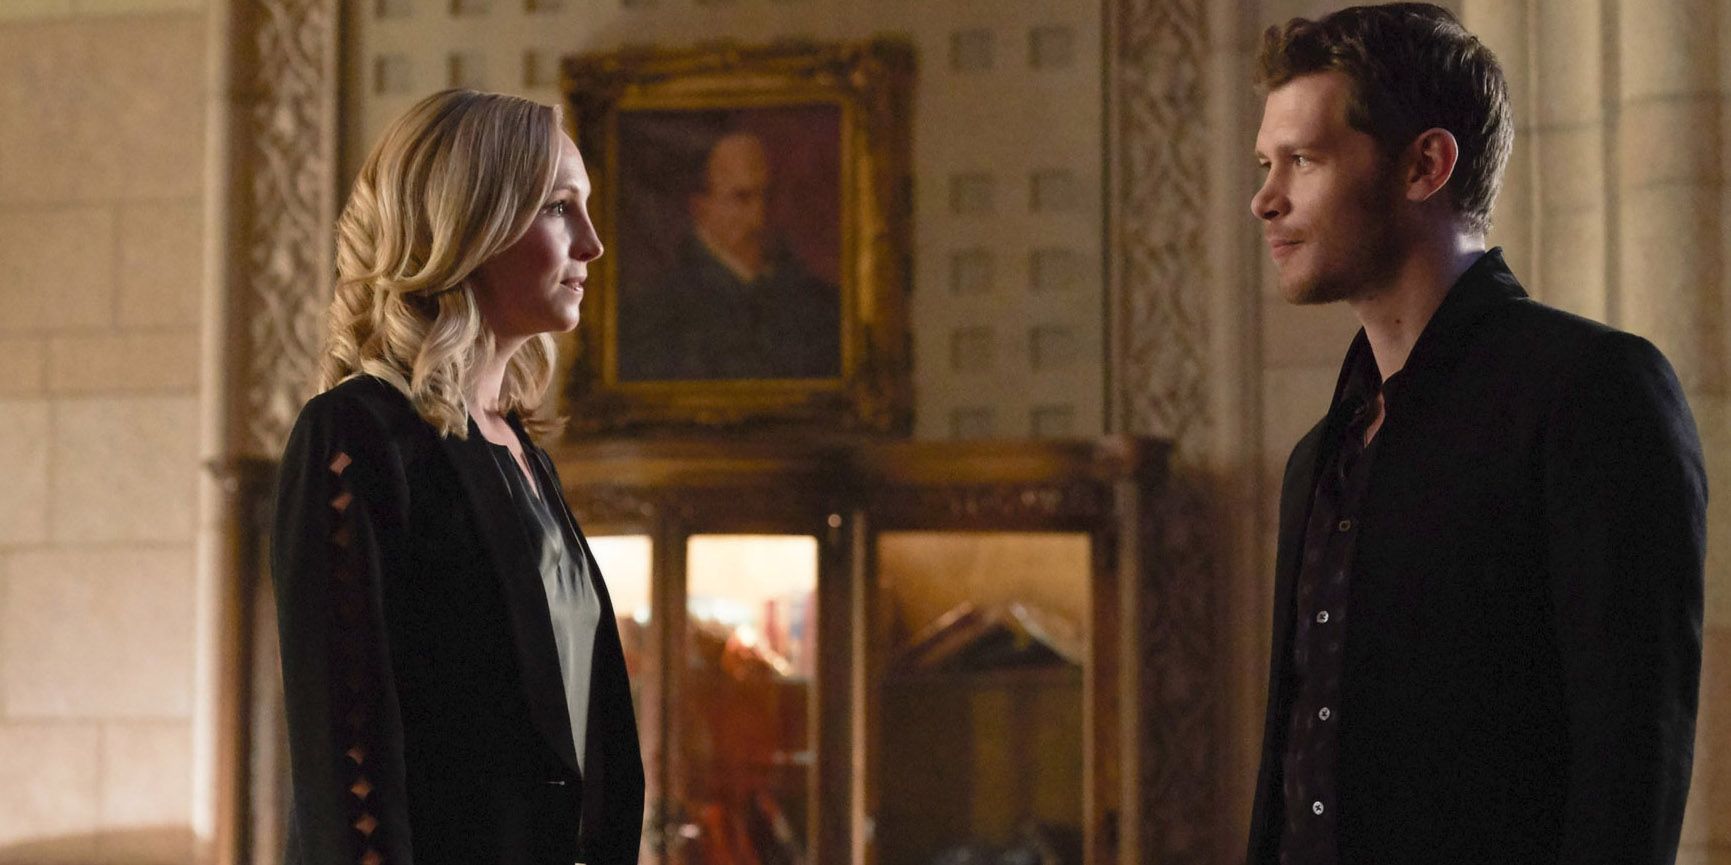 Klaus and Caroline reunite in France in The Originals.